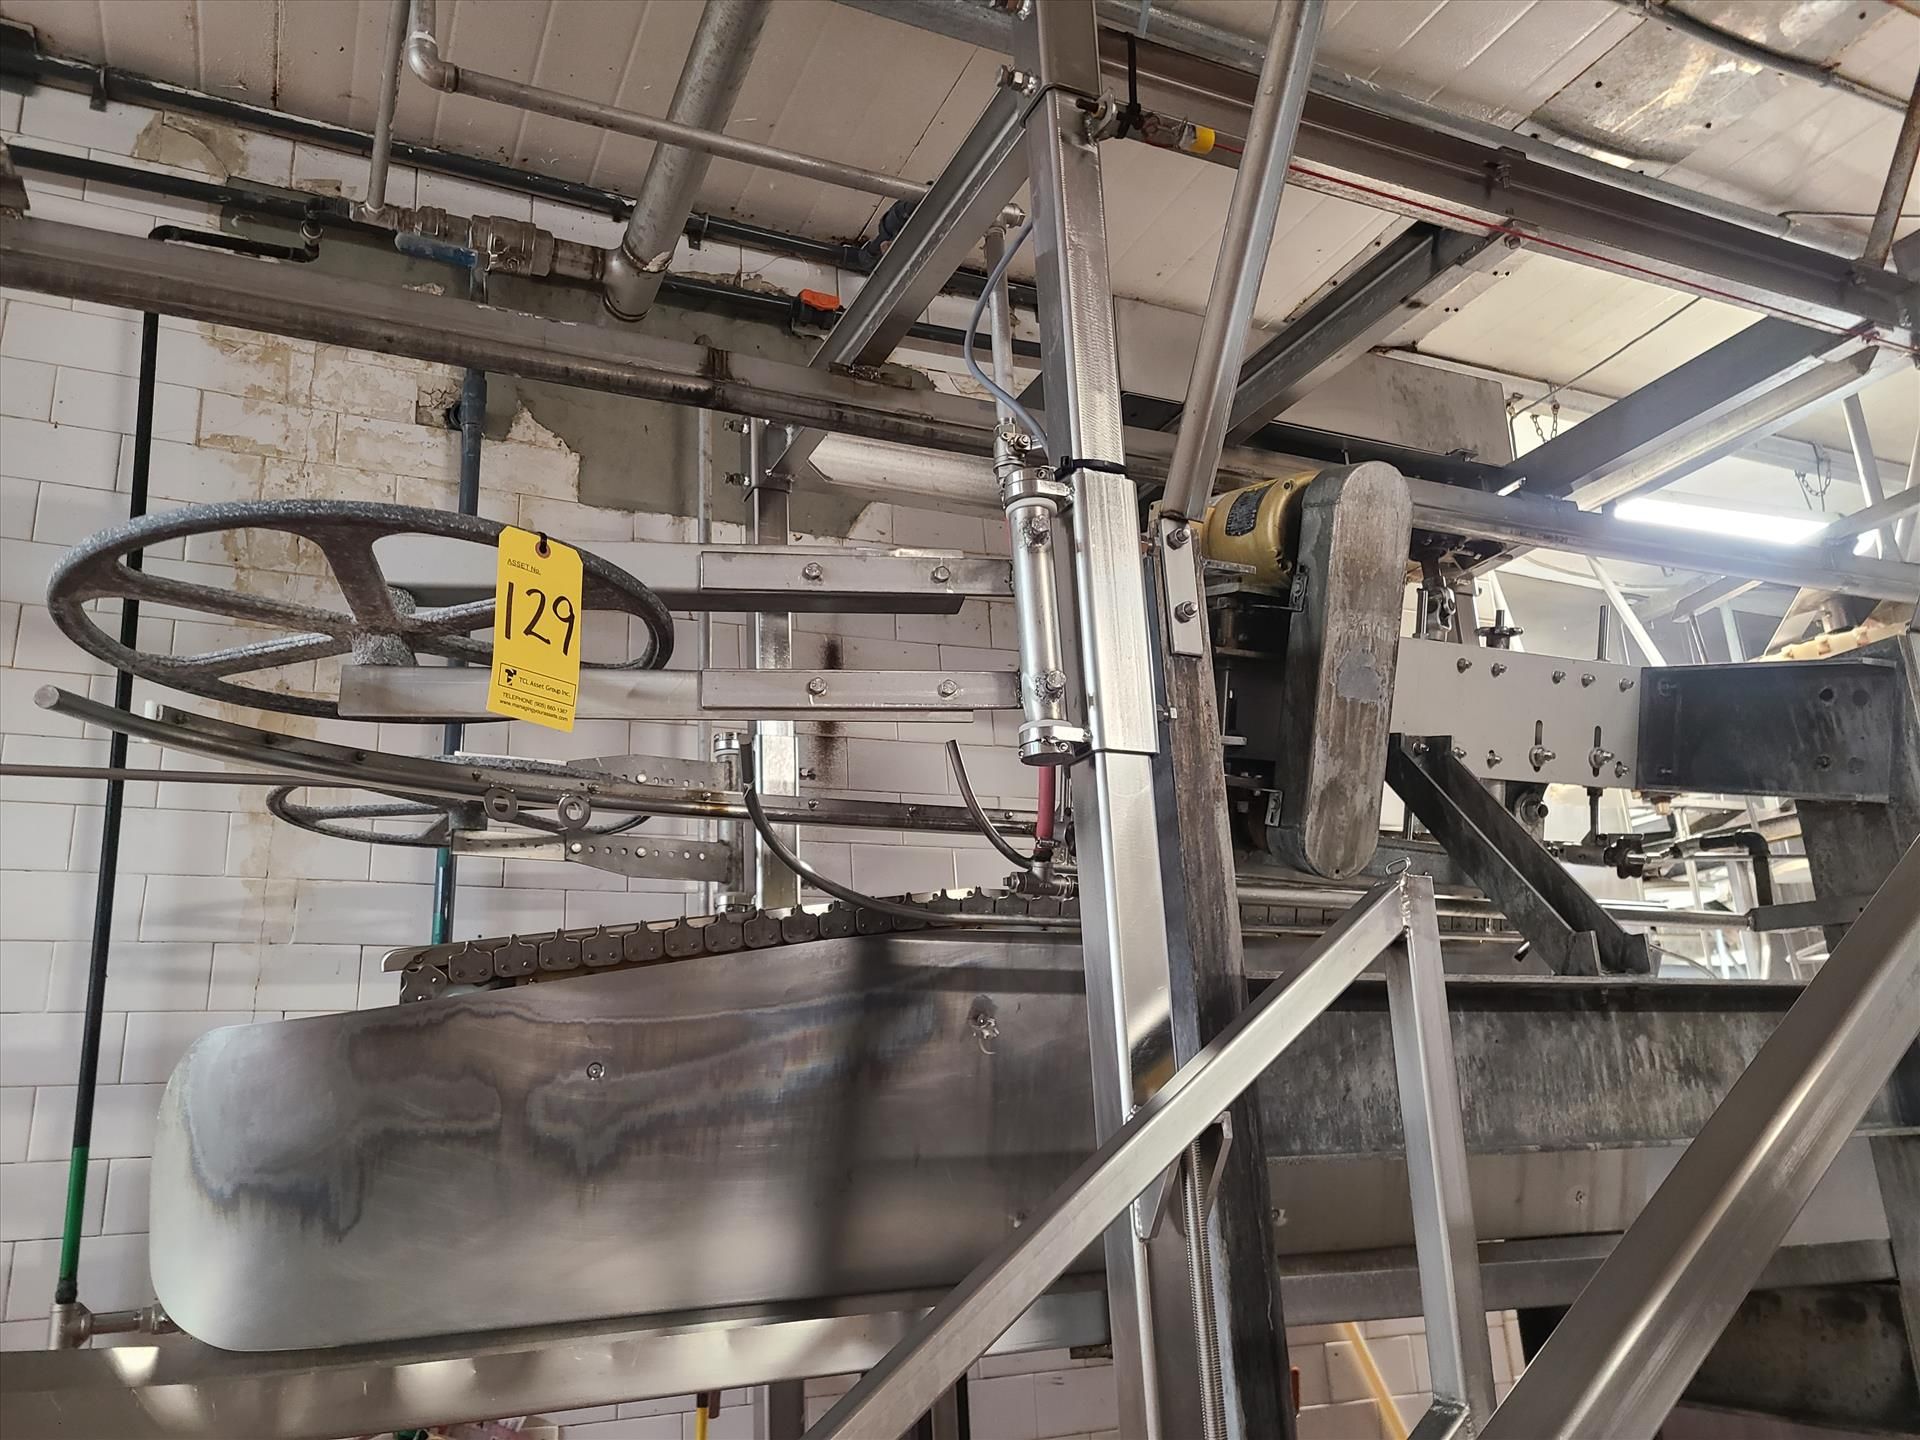 Stork hawk cutter, stainless steel, 1 hp c/w stainless steel work platform [Loc. Defeathering] - Image 2 of 4